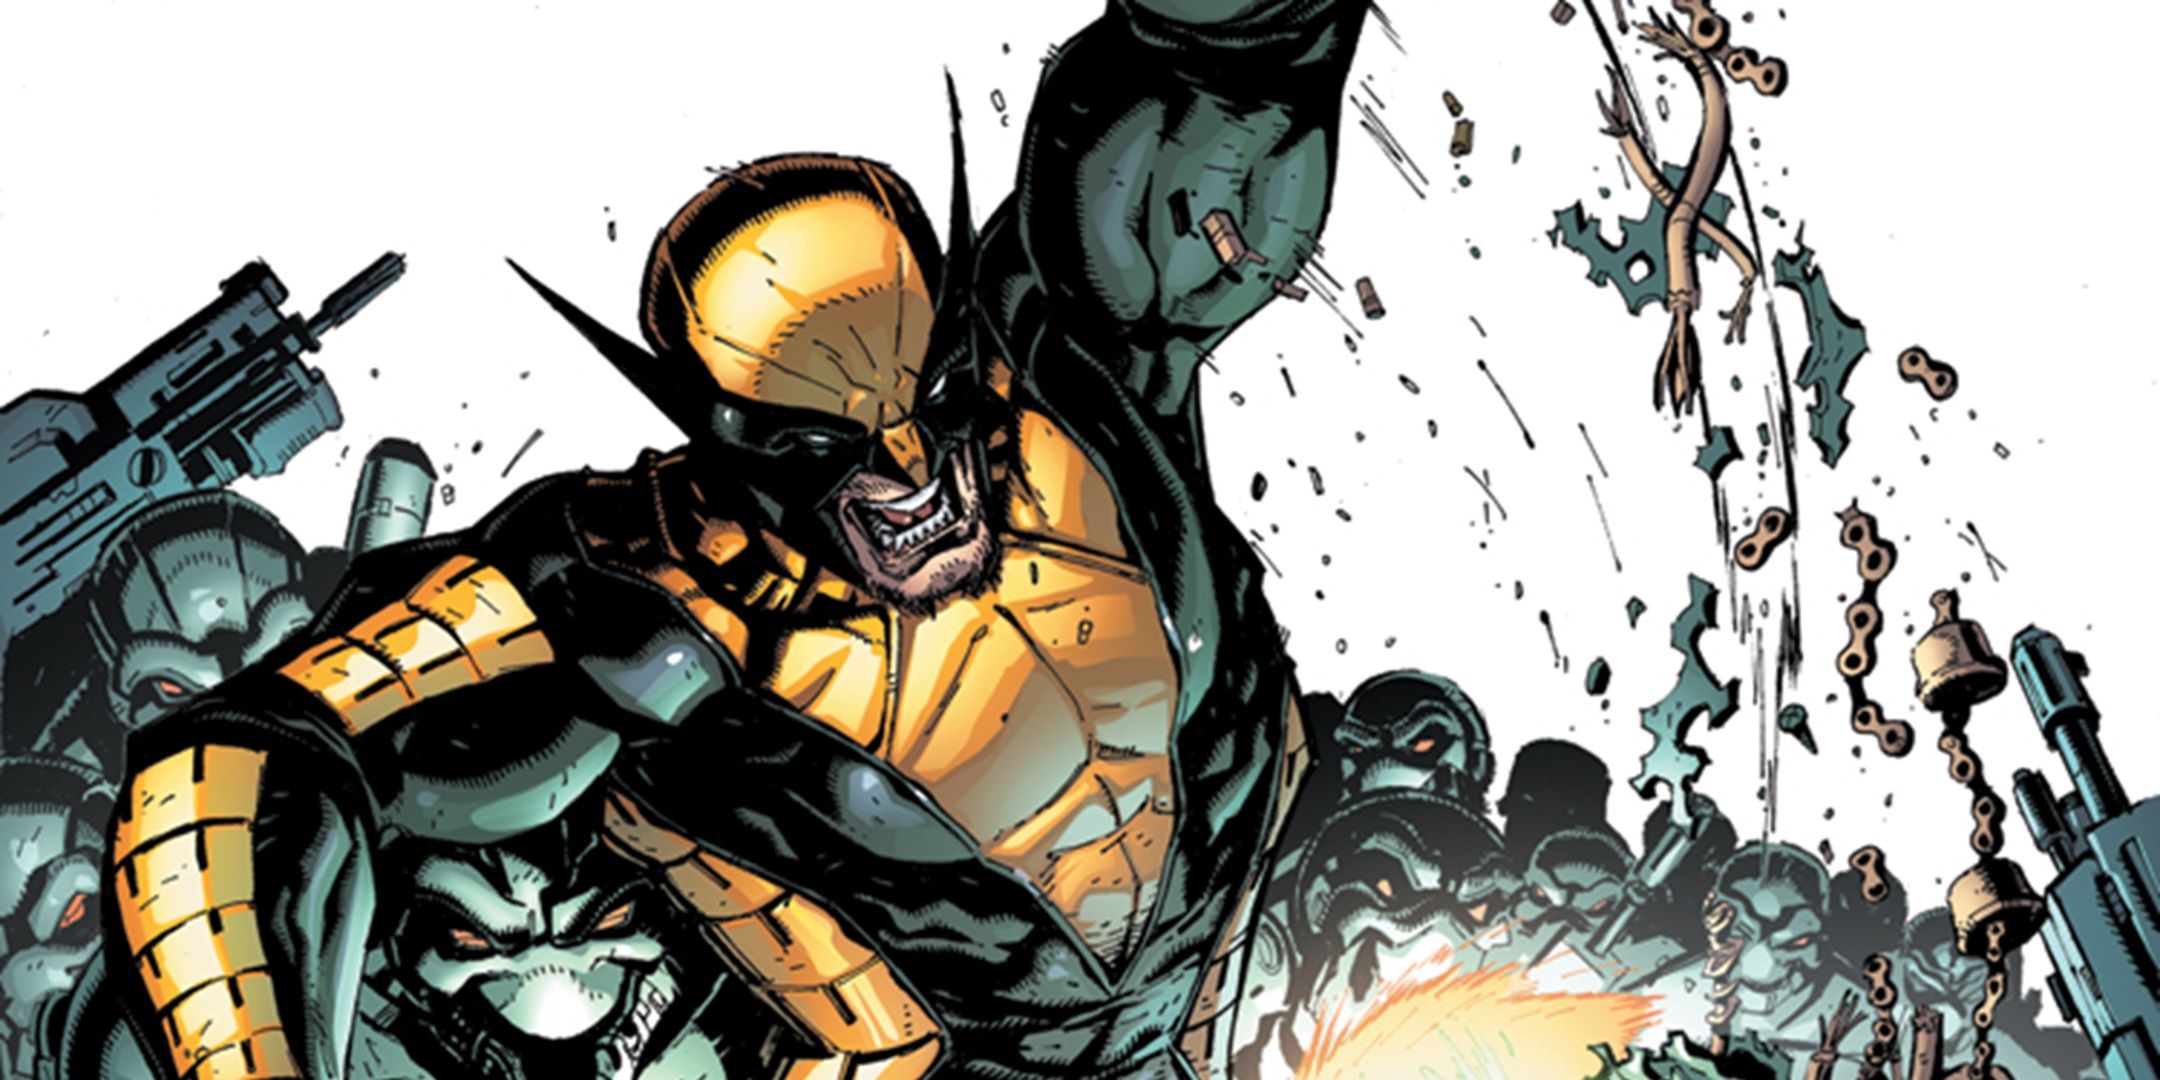 Wolverine wearing armor